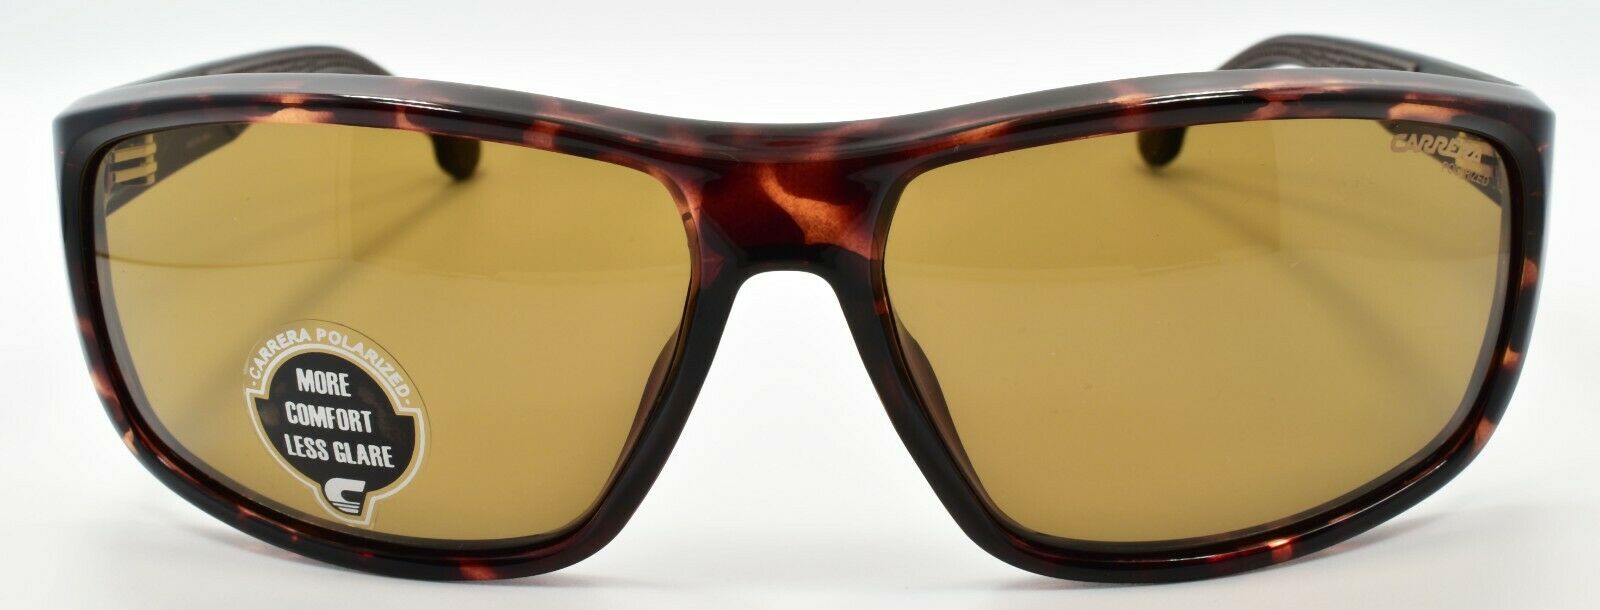 2-Carrera 8038/S 086 Men's Sunglasses 61-15-130 Dark Havana / Bronze Polarized-716736231204-IKSpecs